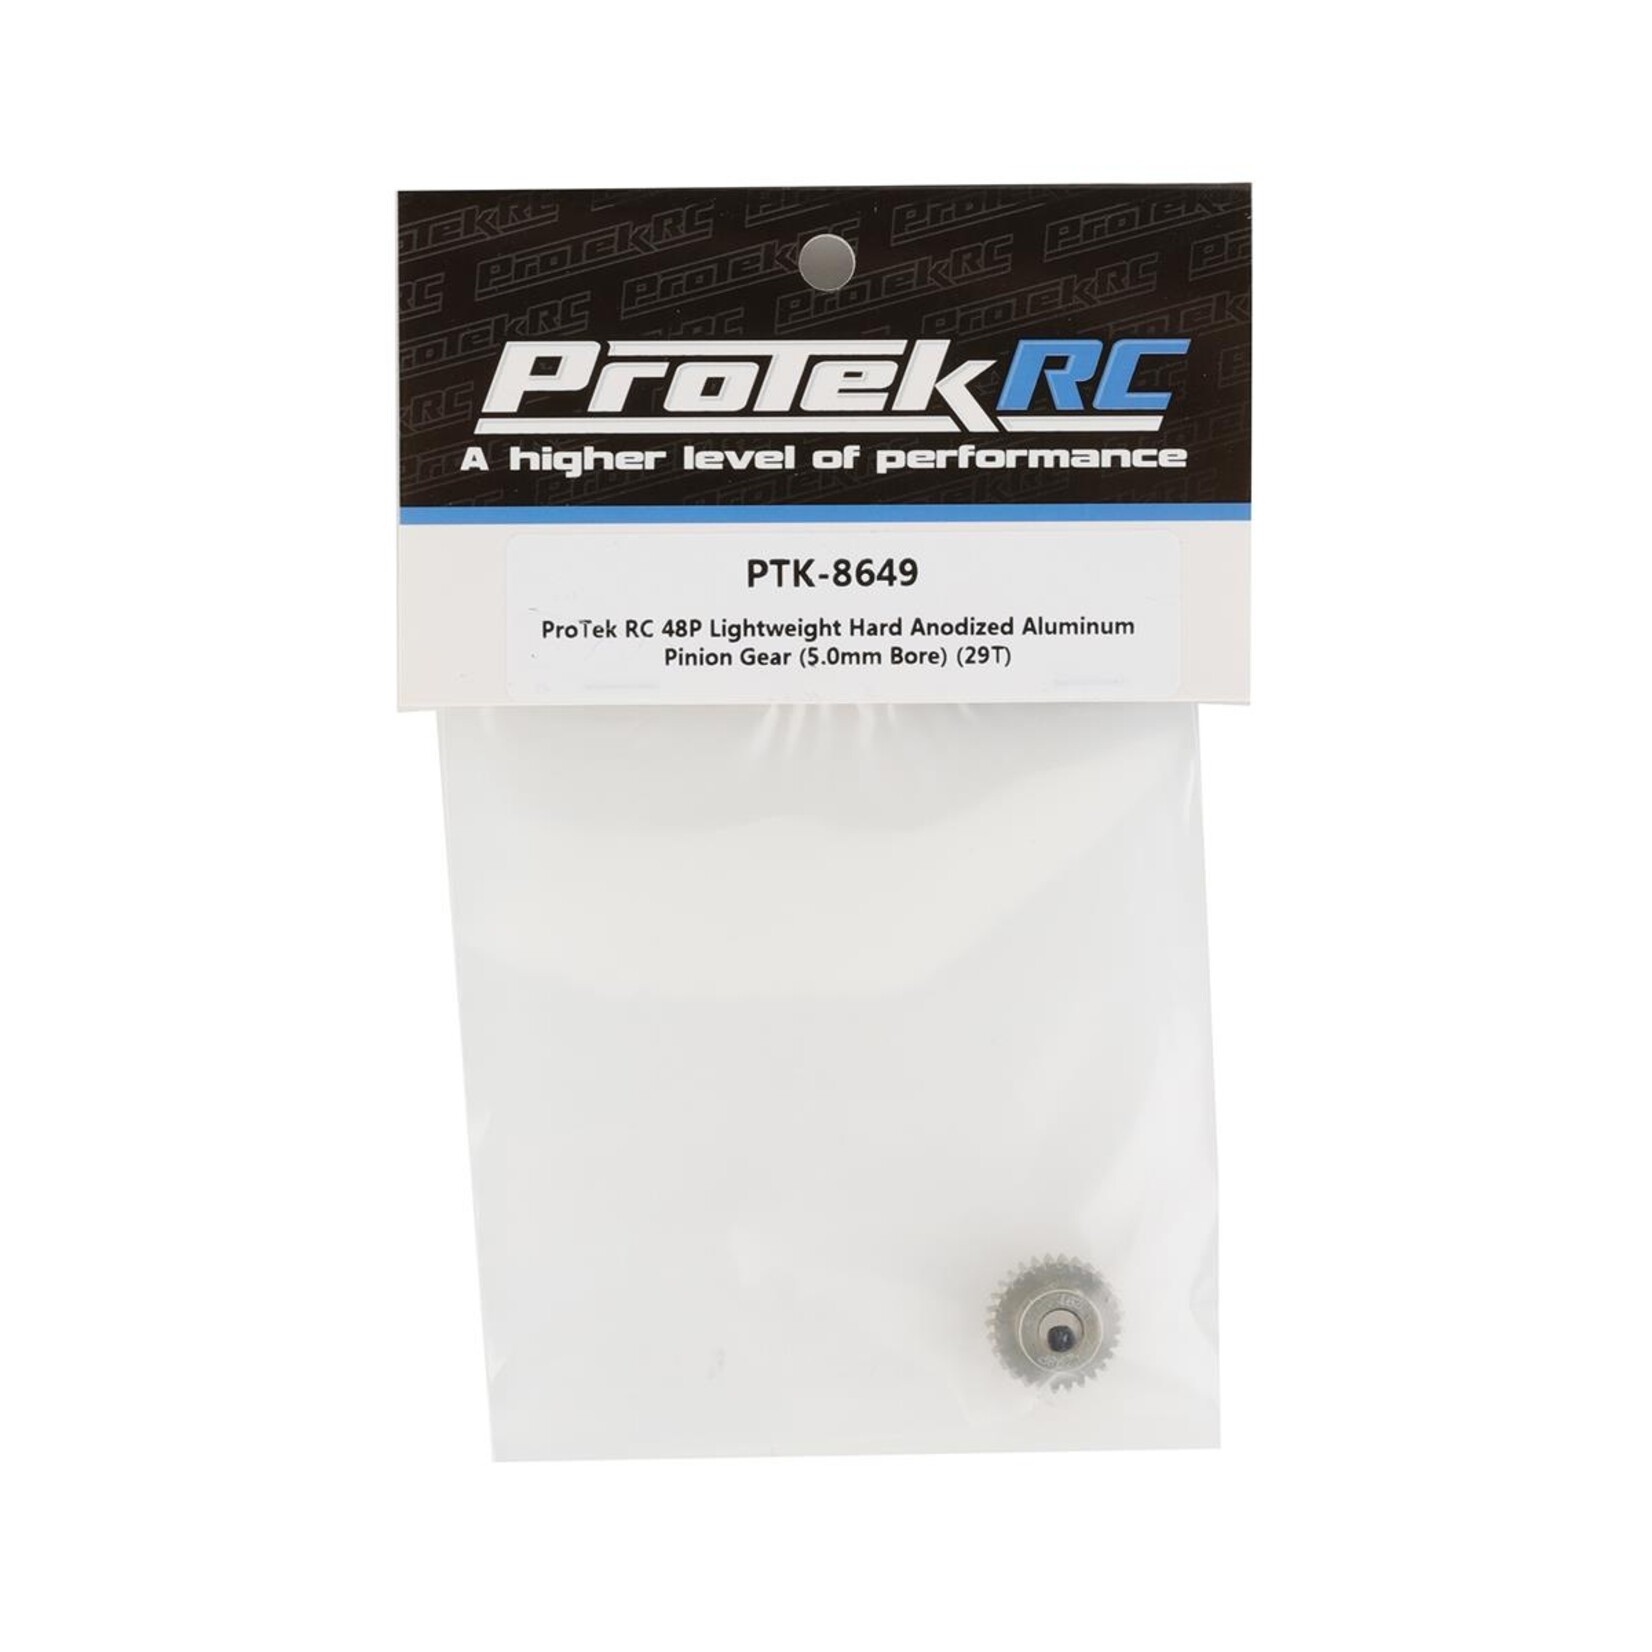 ProTek RC ProTek RC 48P Lightweight Hard Anodized Aluminum Pinion Gear (5.0mm Bore) (29T)  #PTK-8649